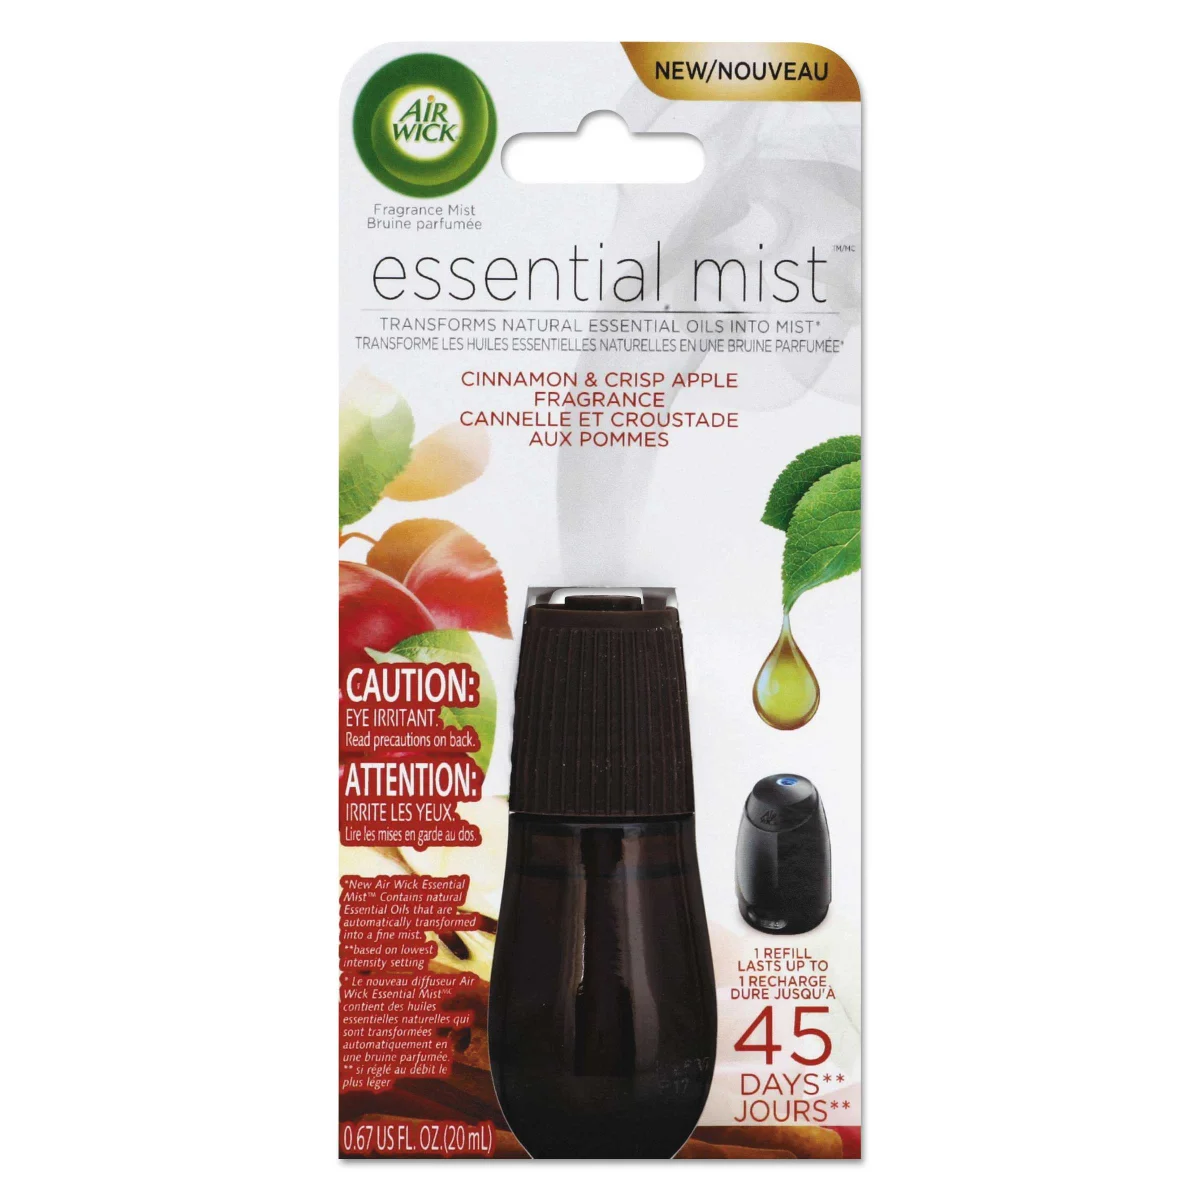 Essential Mist Refill, Cinnamon and Crisp Apple, 0.67 Oz Air Fresheners